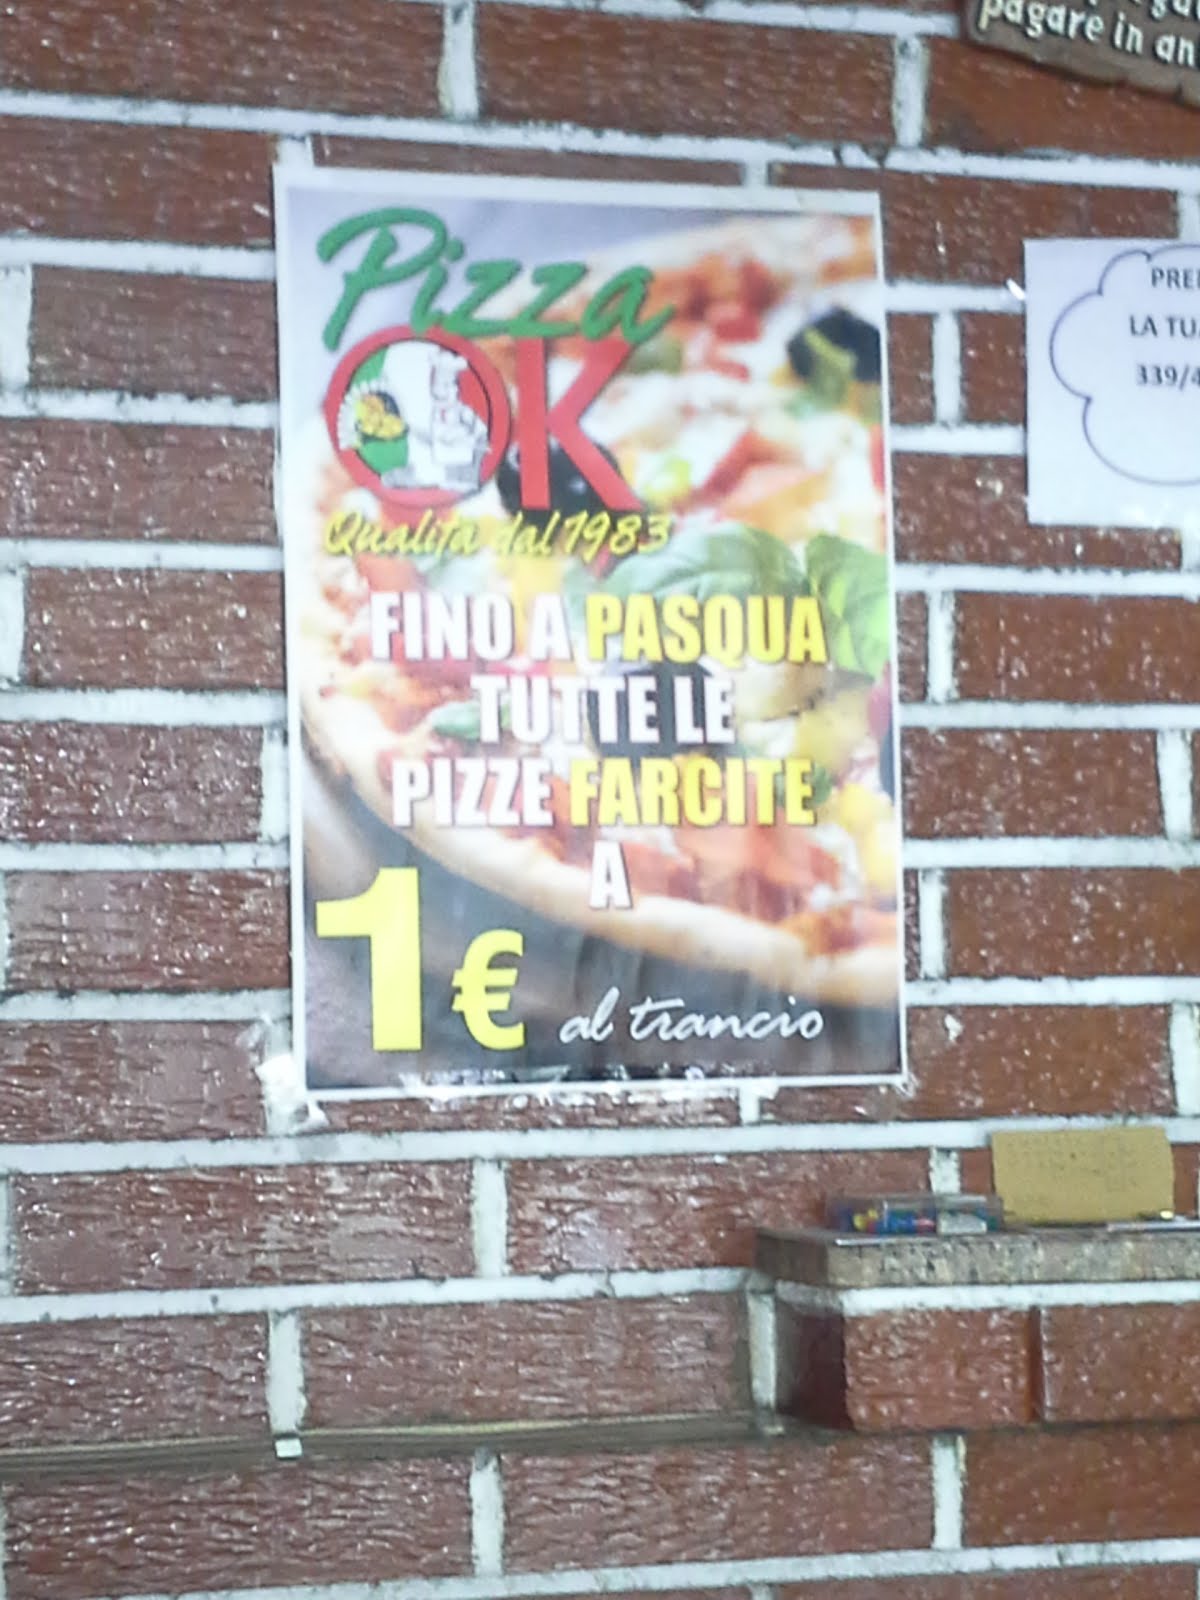 Pizzeria Okay, Piazza Santa Chiara Vasto